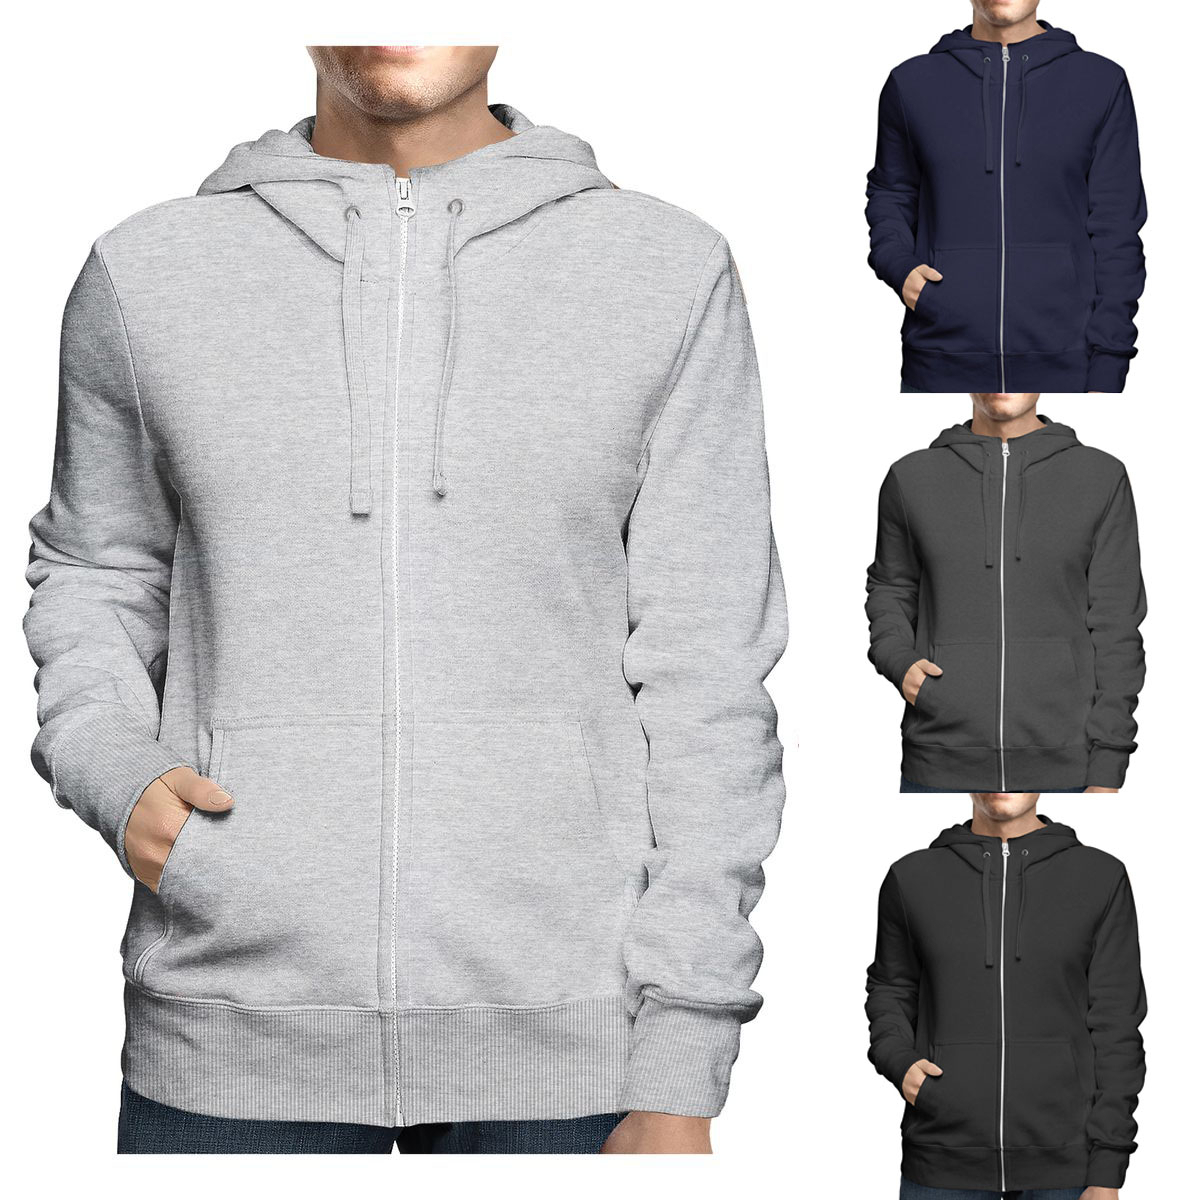 Multi-Pack: Men's Premium Soft Cozy Full Zip-Up Fleece Lined Hoodie Sweatshirt - 1-pack, Small